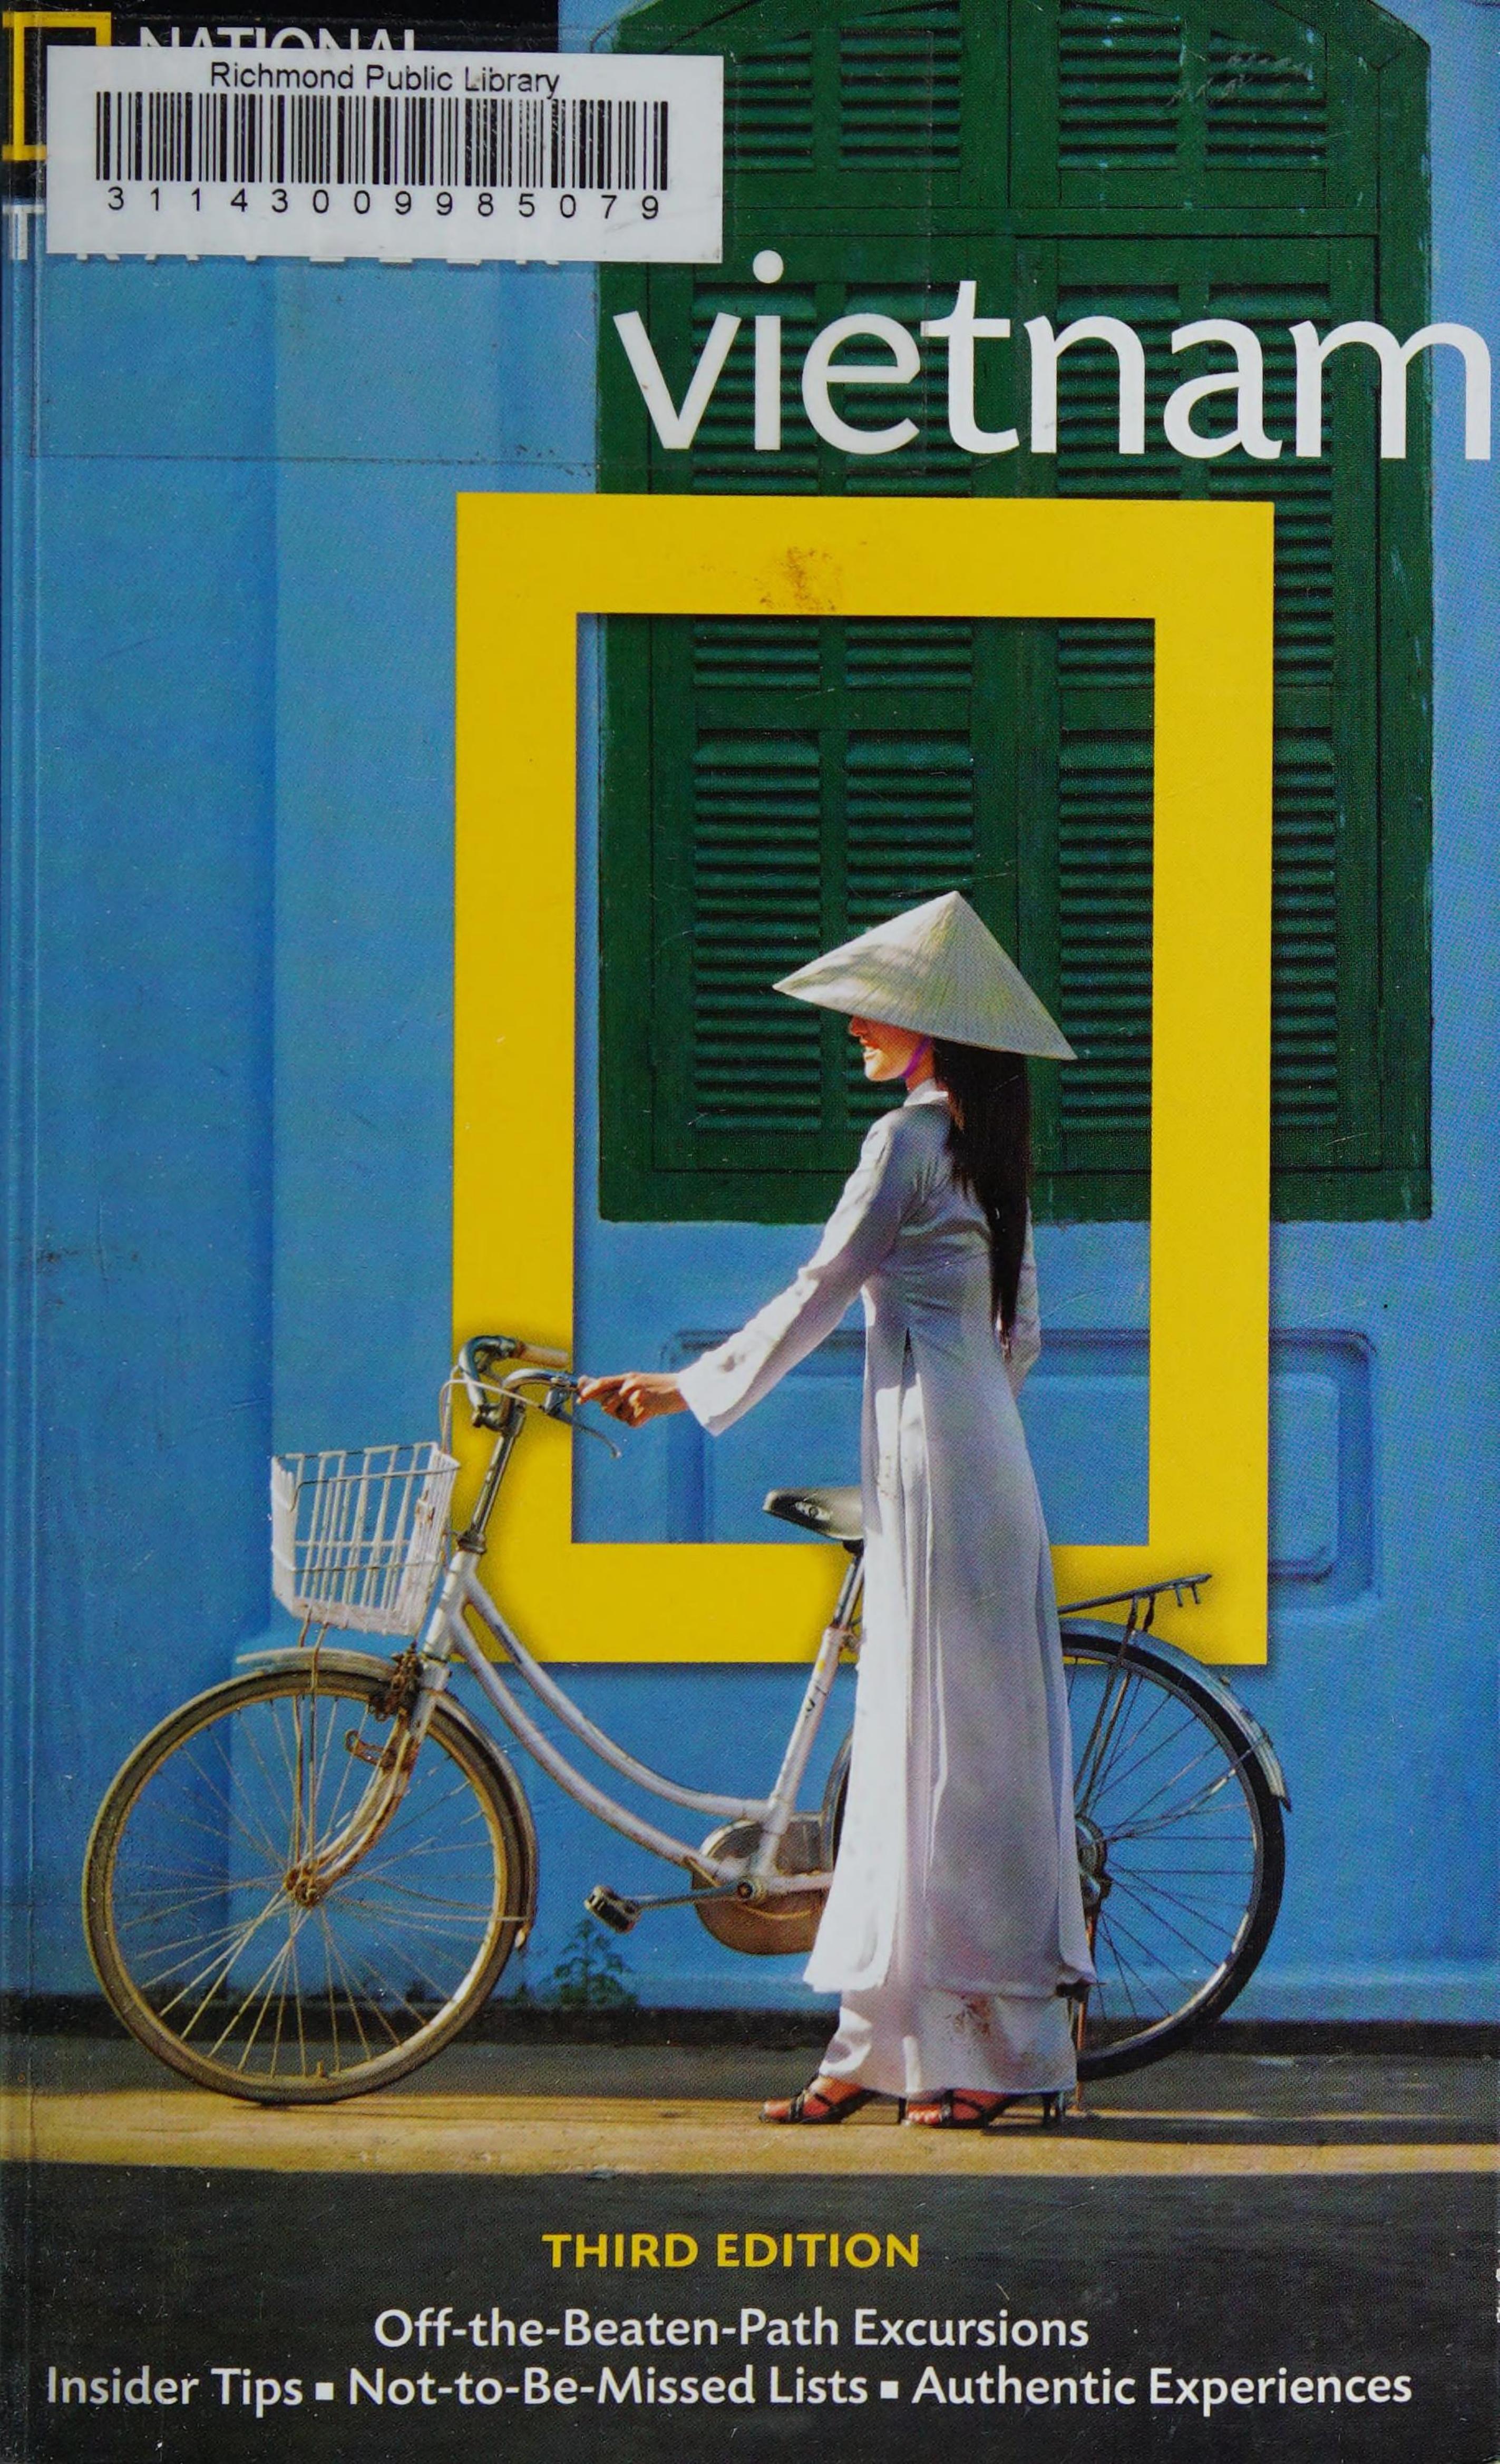 National Geographic Traveler: Vietnam by James Sullivan